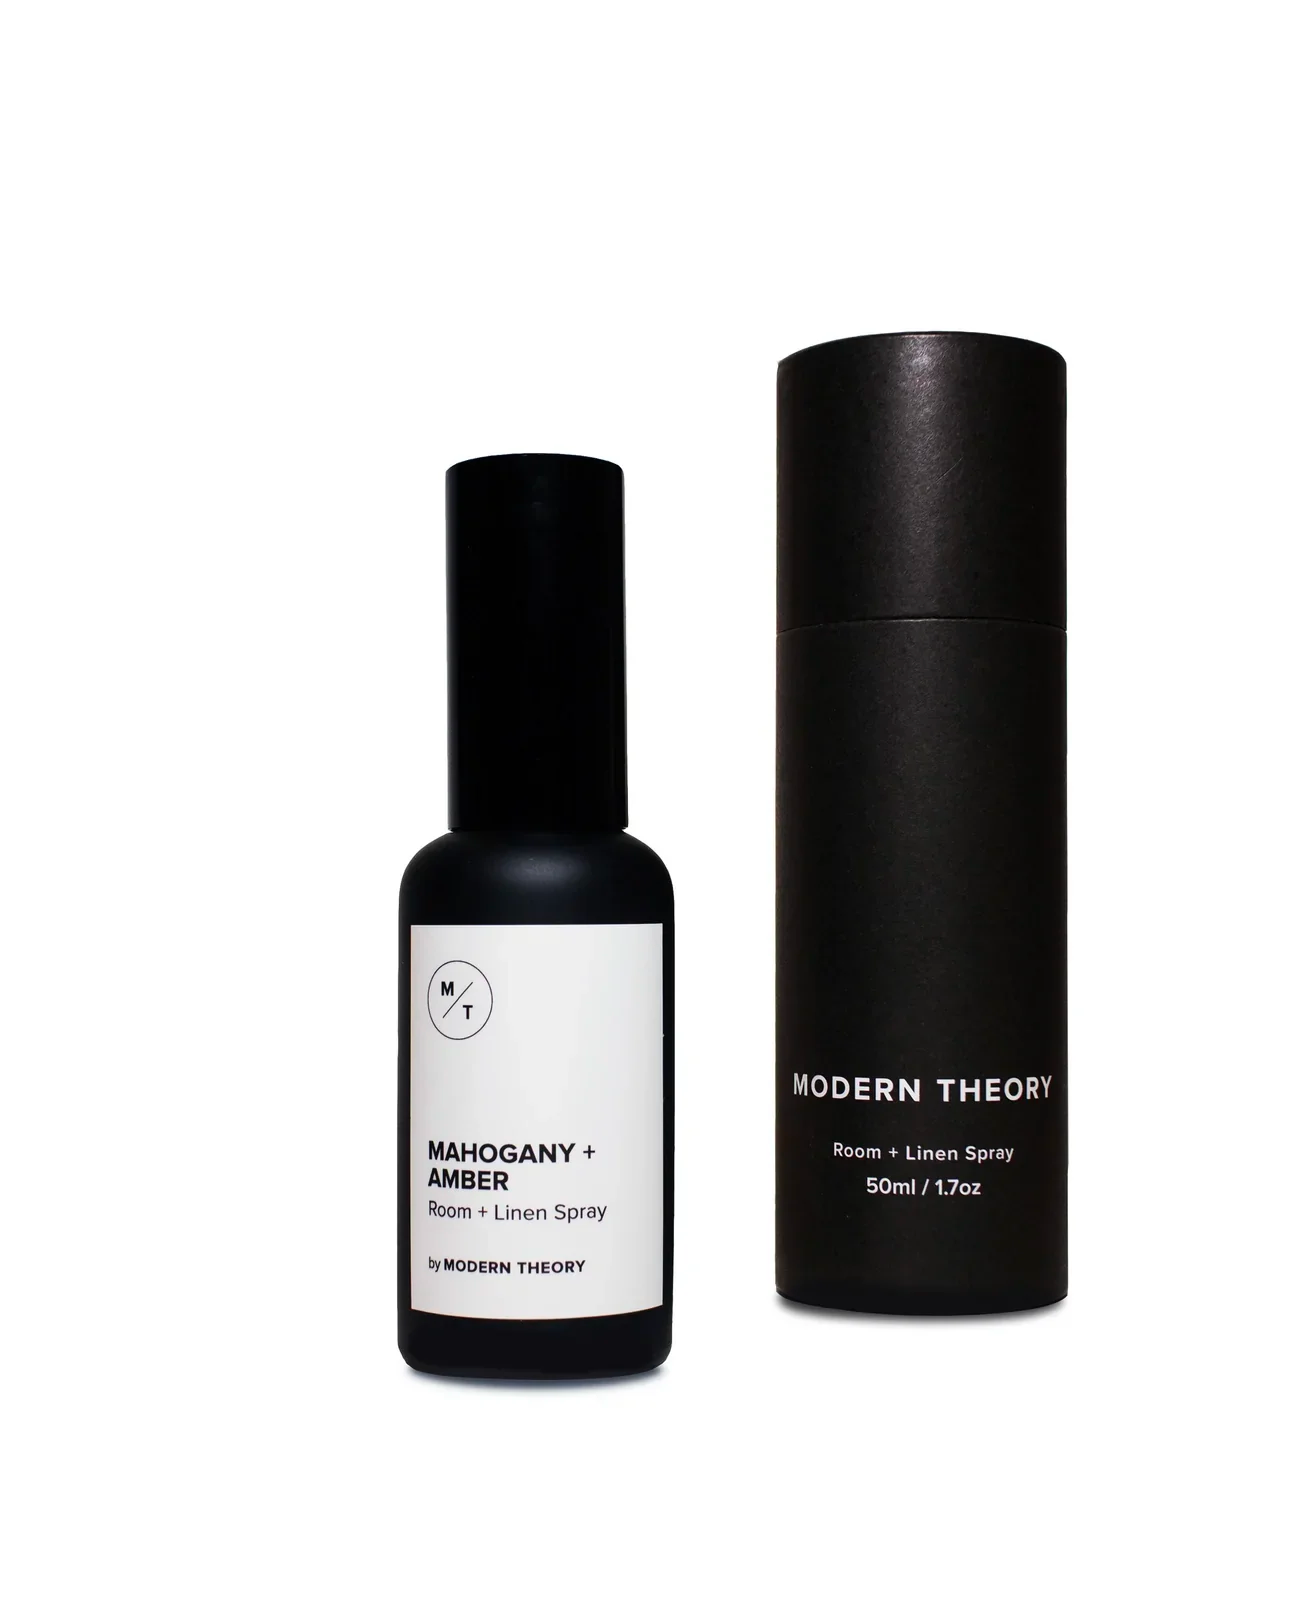 Product Image for MAHOGANY + AMBER Room & Linen Spray